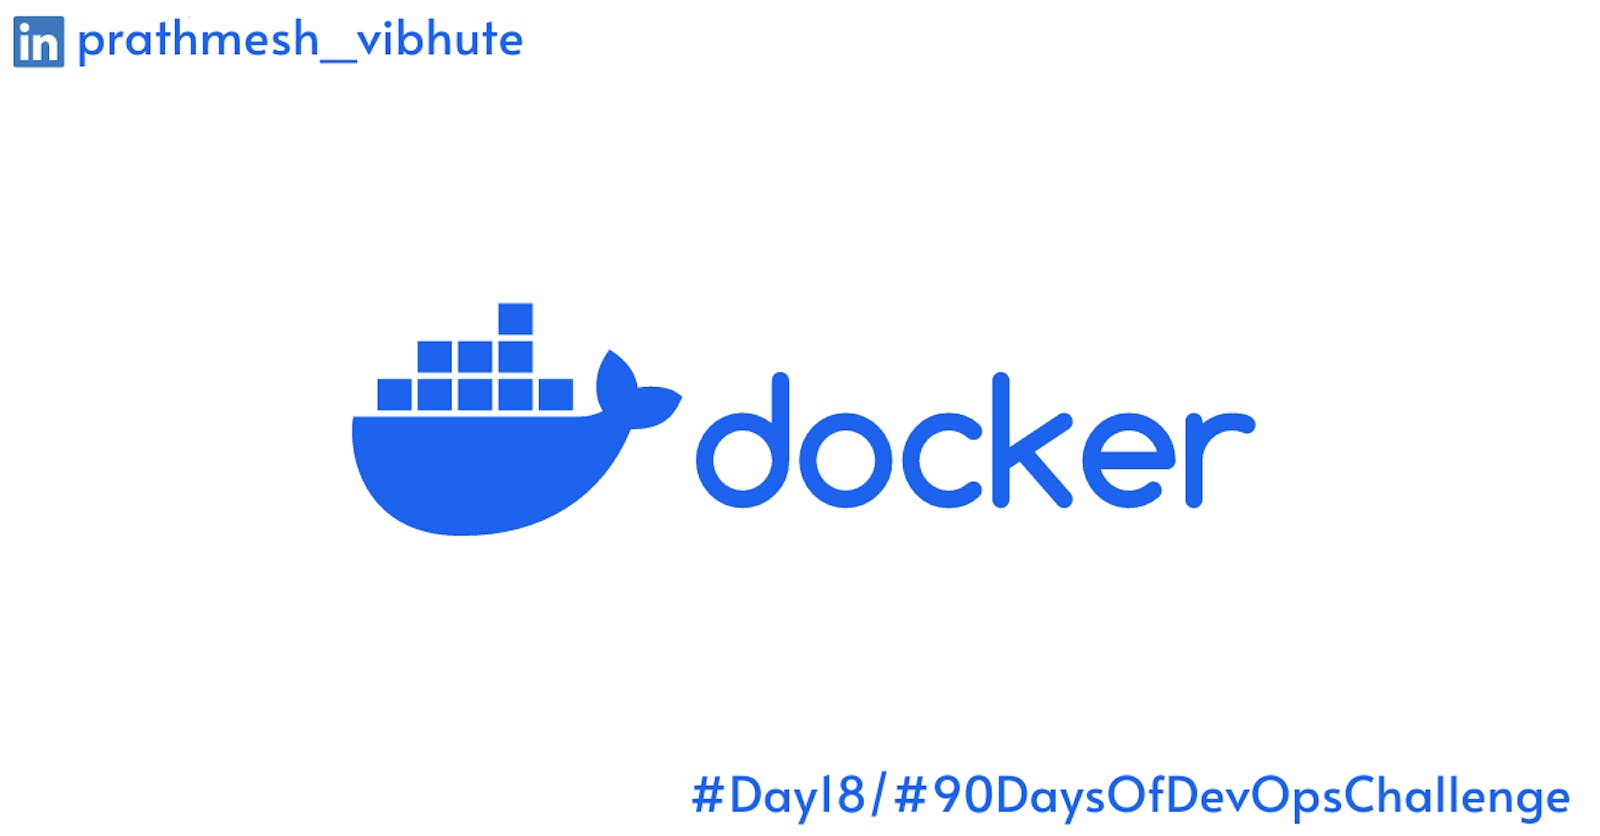 Day 18 : Docker for DevOps Engineers